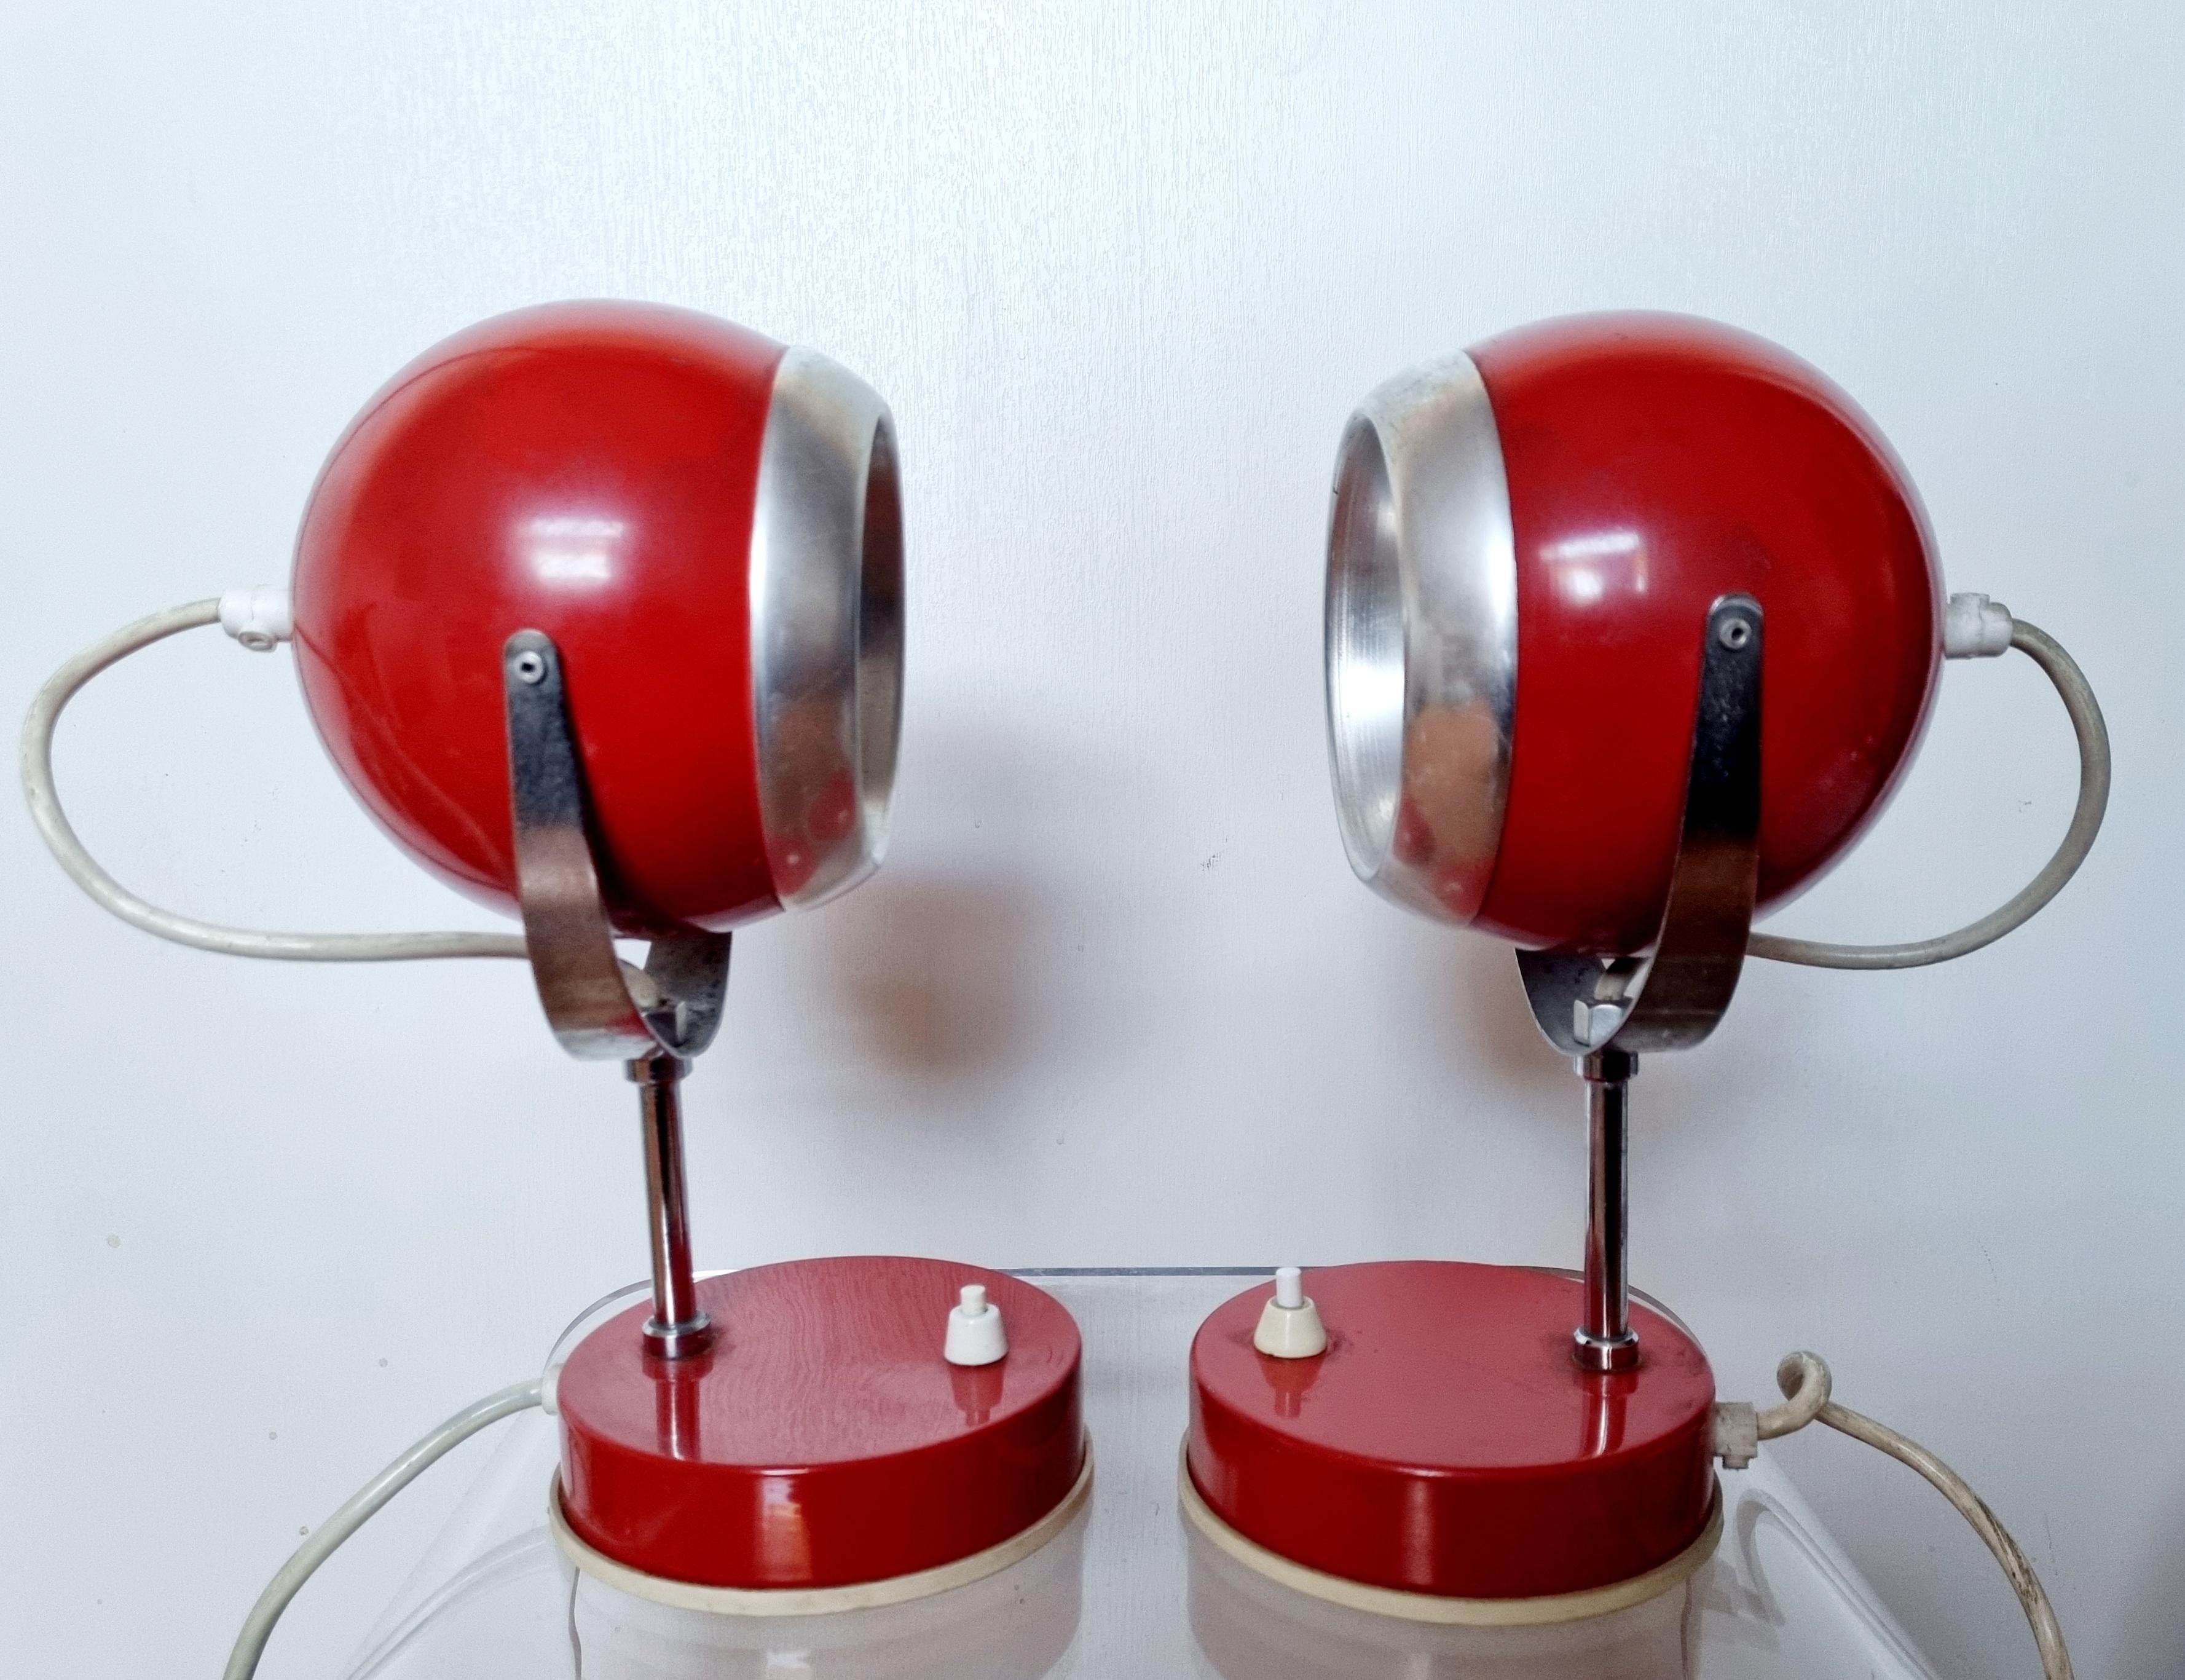 Mid Century Modern Atomic Eyeball Table Lamps by Sijaj Hrastnik, 70s, Pair For Sale 1